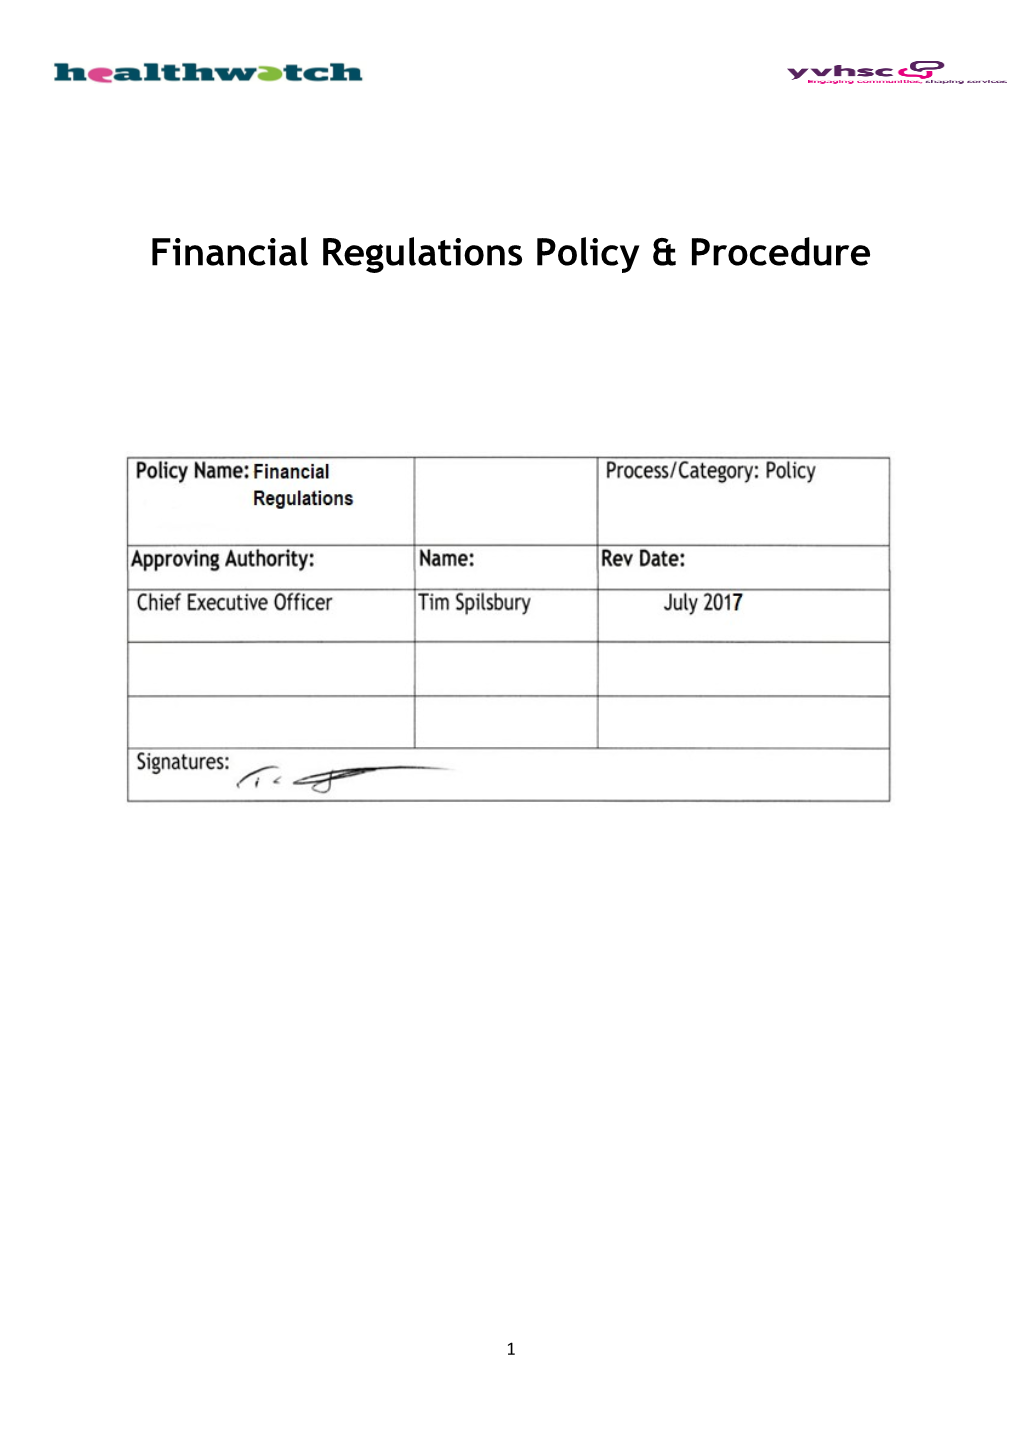 Financial Regulations Policy & Procedure